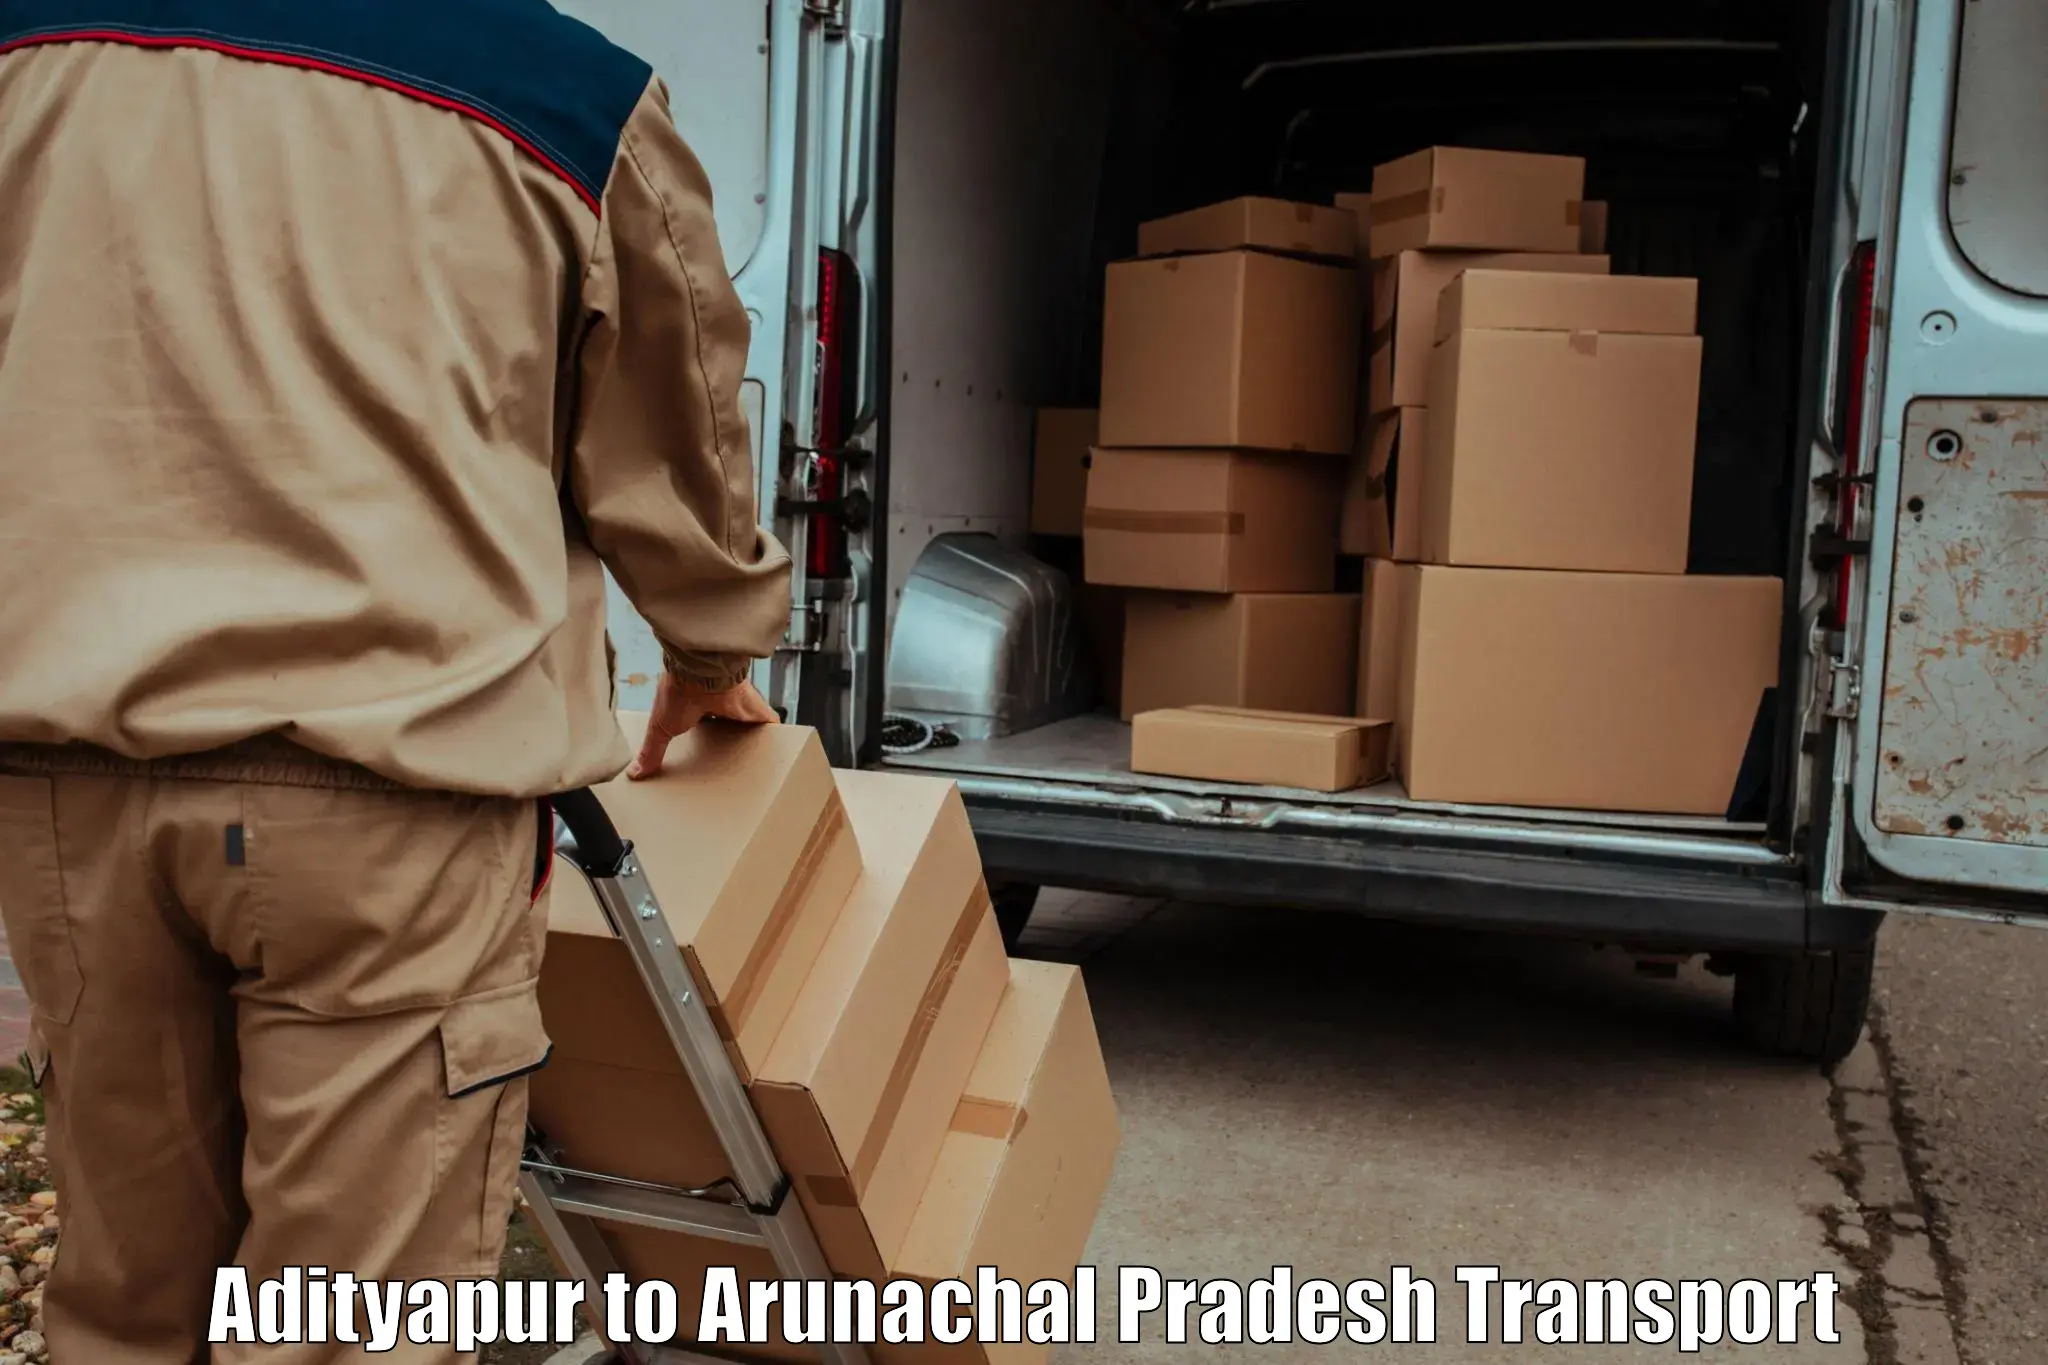 Delivery service Adityapur to Sagalee